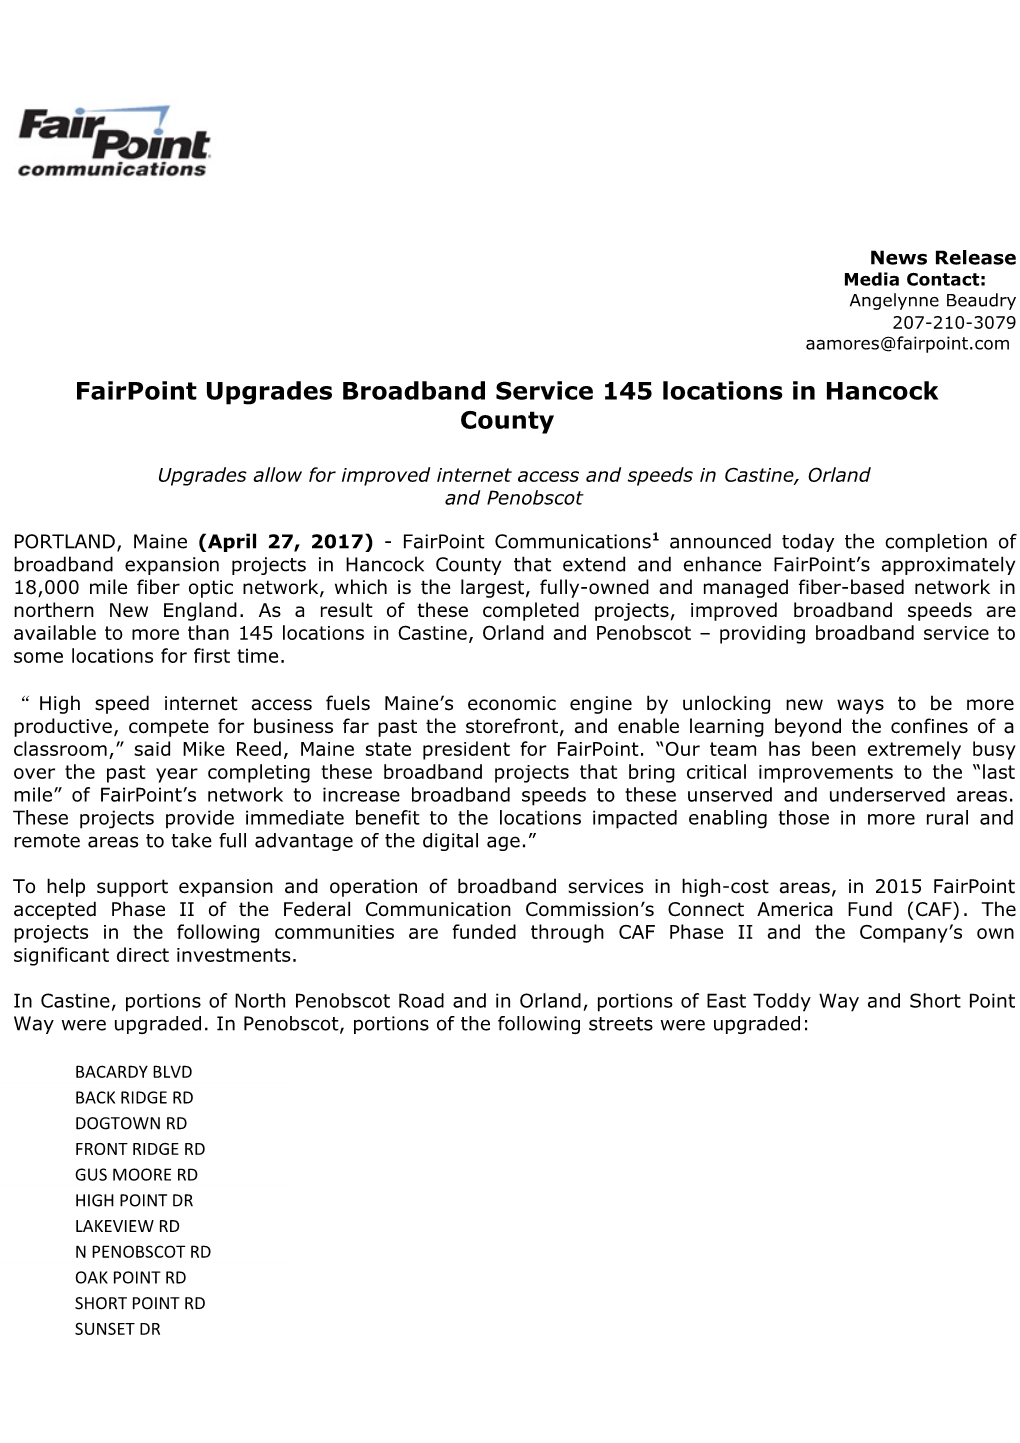 Fairpoint Upgrades Broadband Service 145 Locations in Hancock County